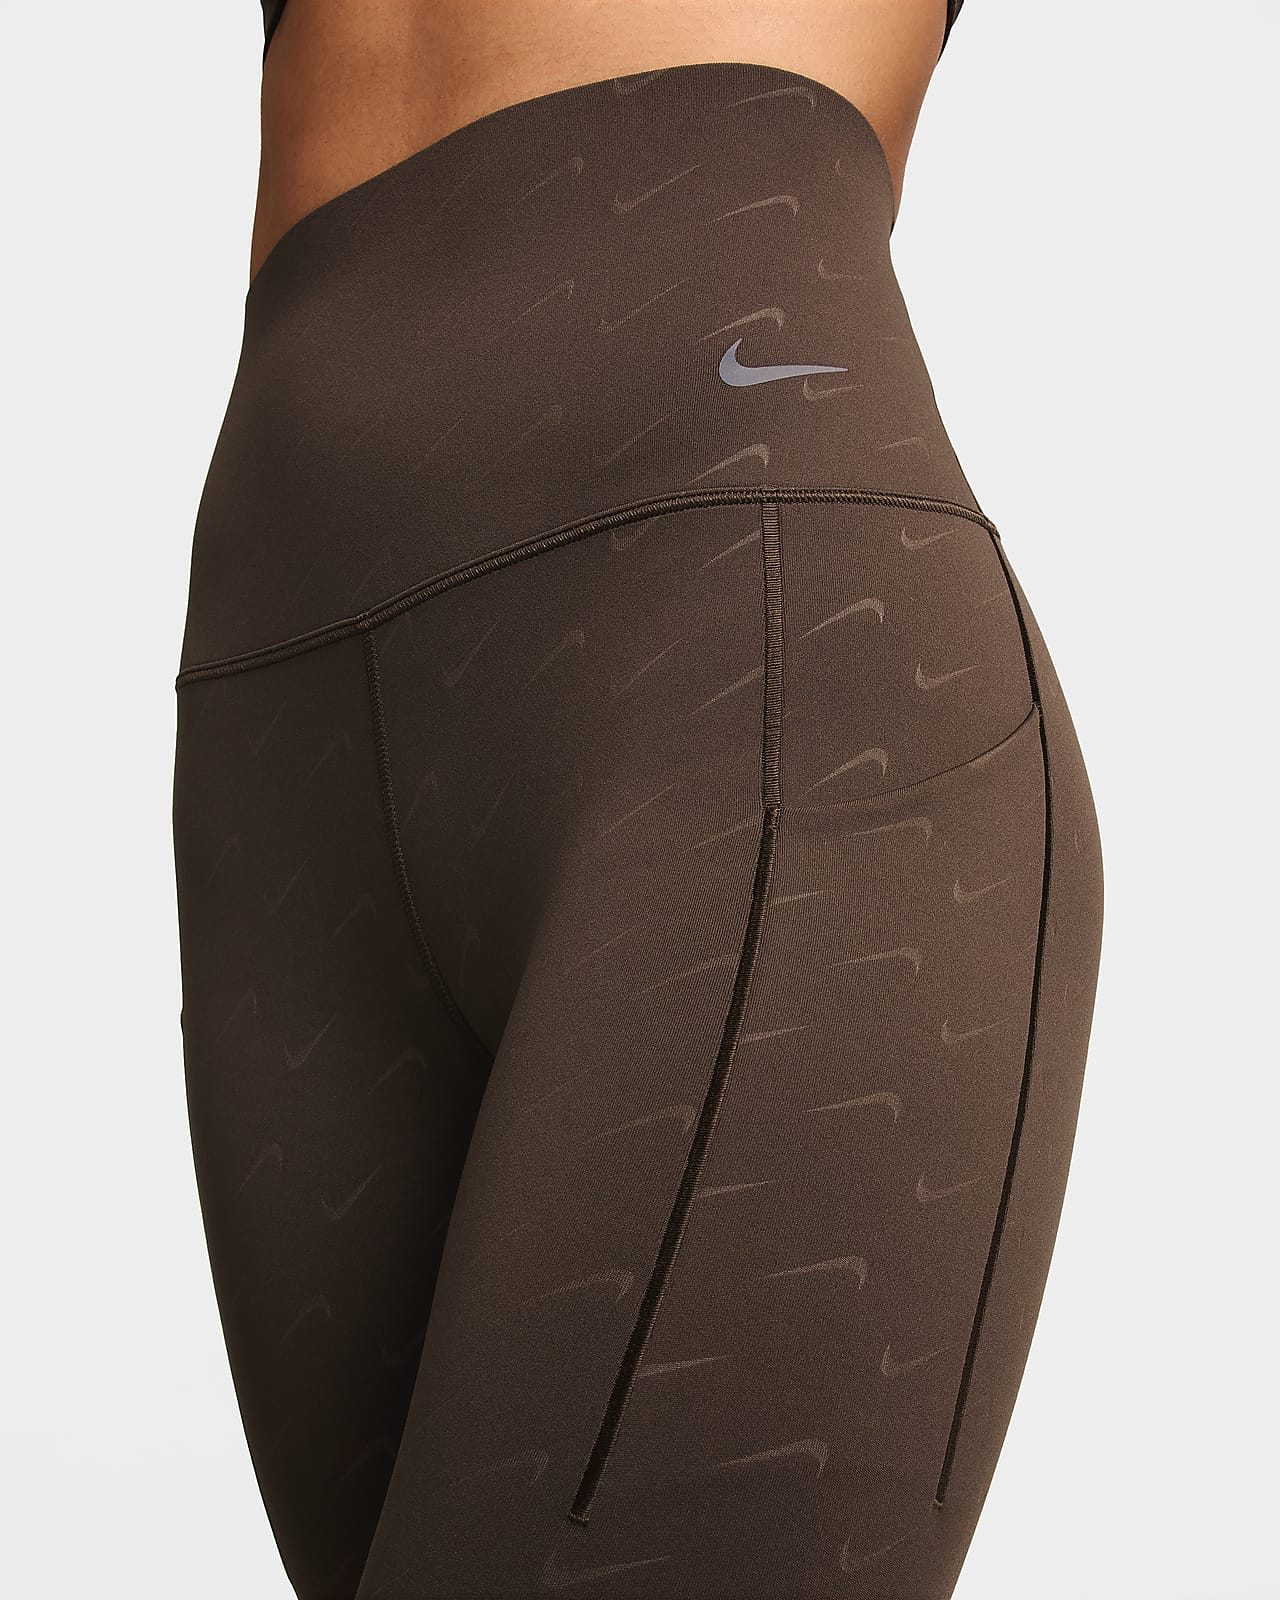 Nike Air Women's Leggings Logo Printed Nike Air Stretchy Knit Zipped Front  | eBay